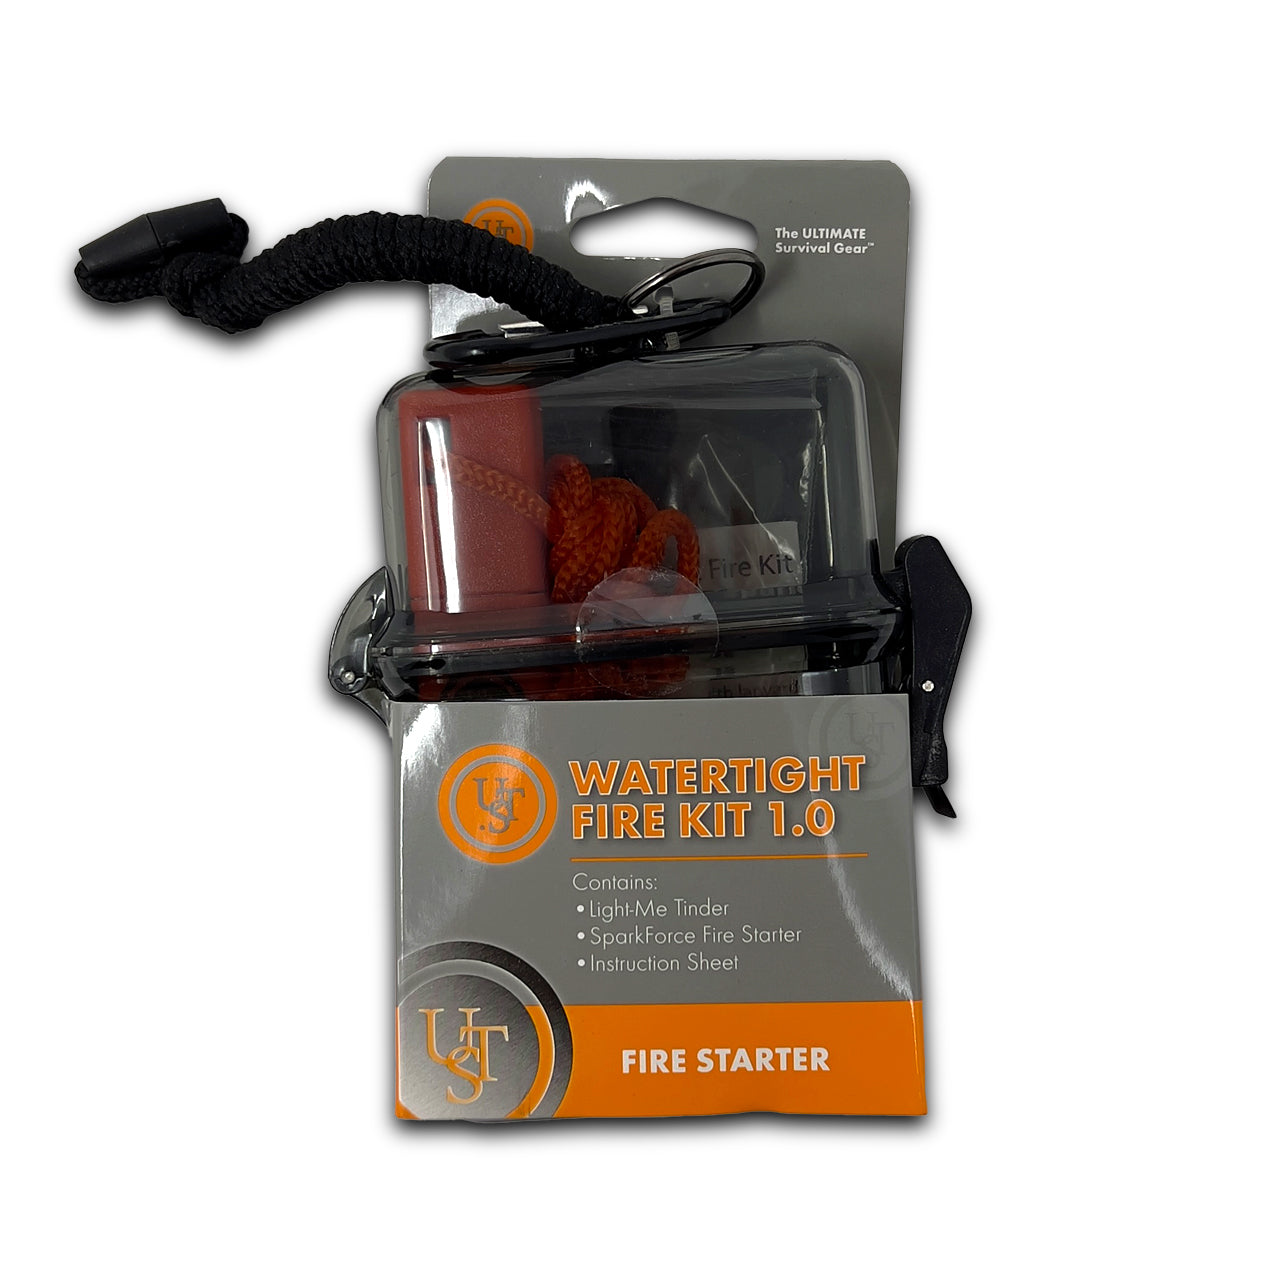 Watertight Fire Kit 1.0